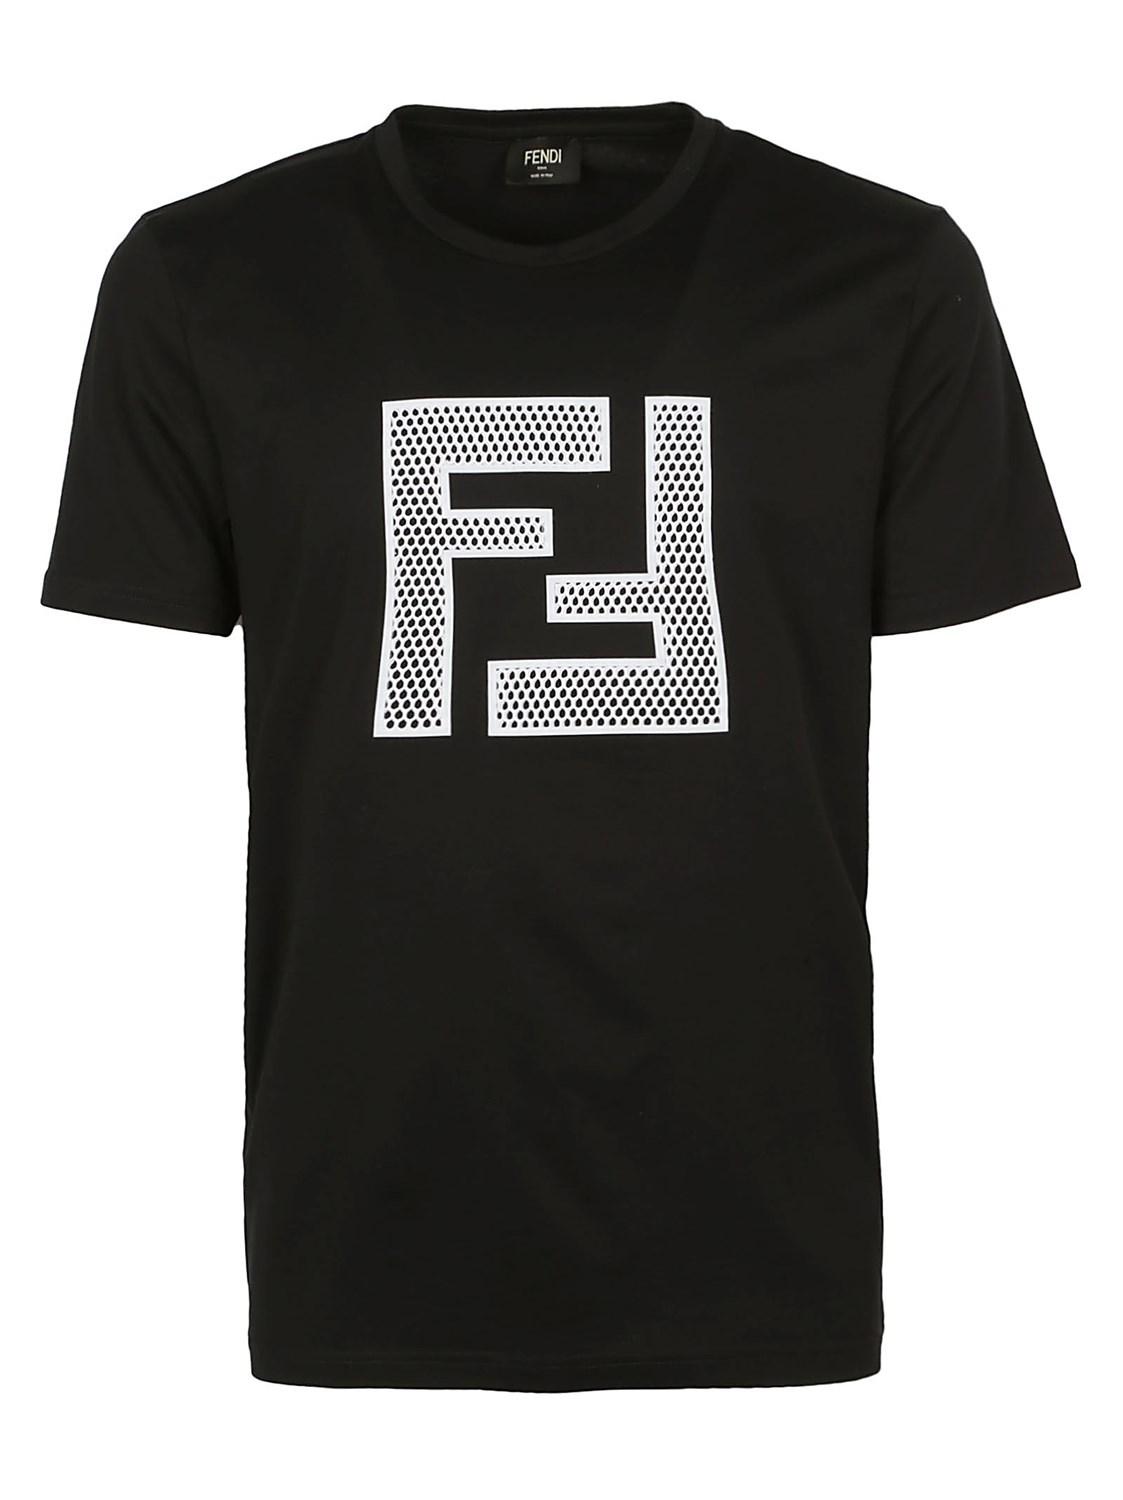 Fendi Cotton T-shirt in Black for Men - Lyst